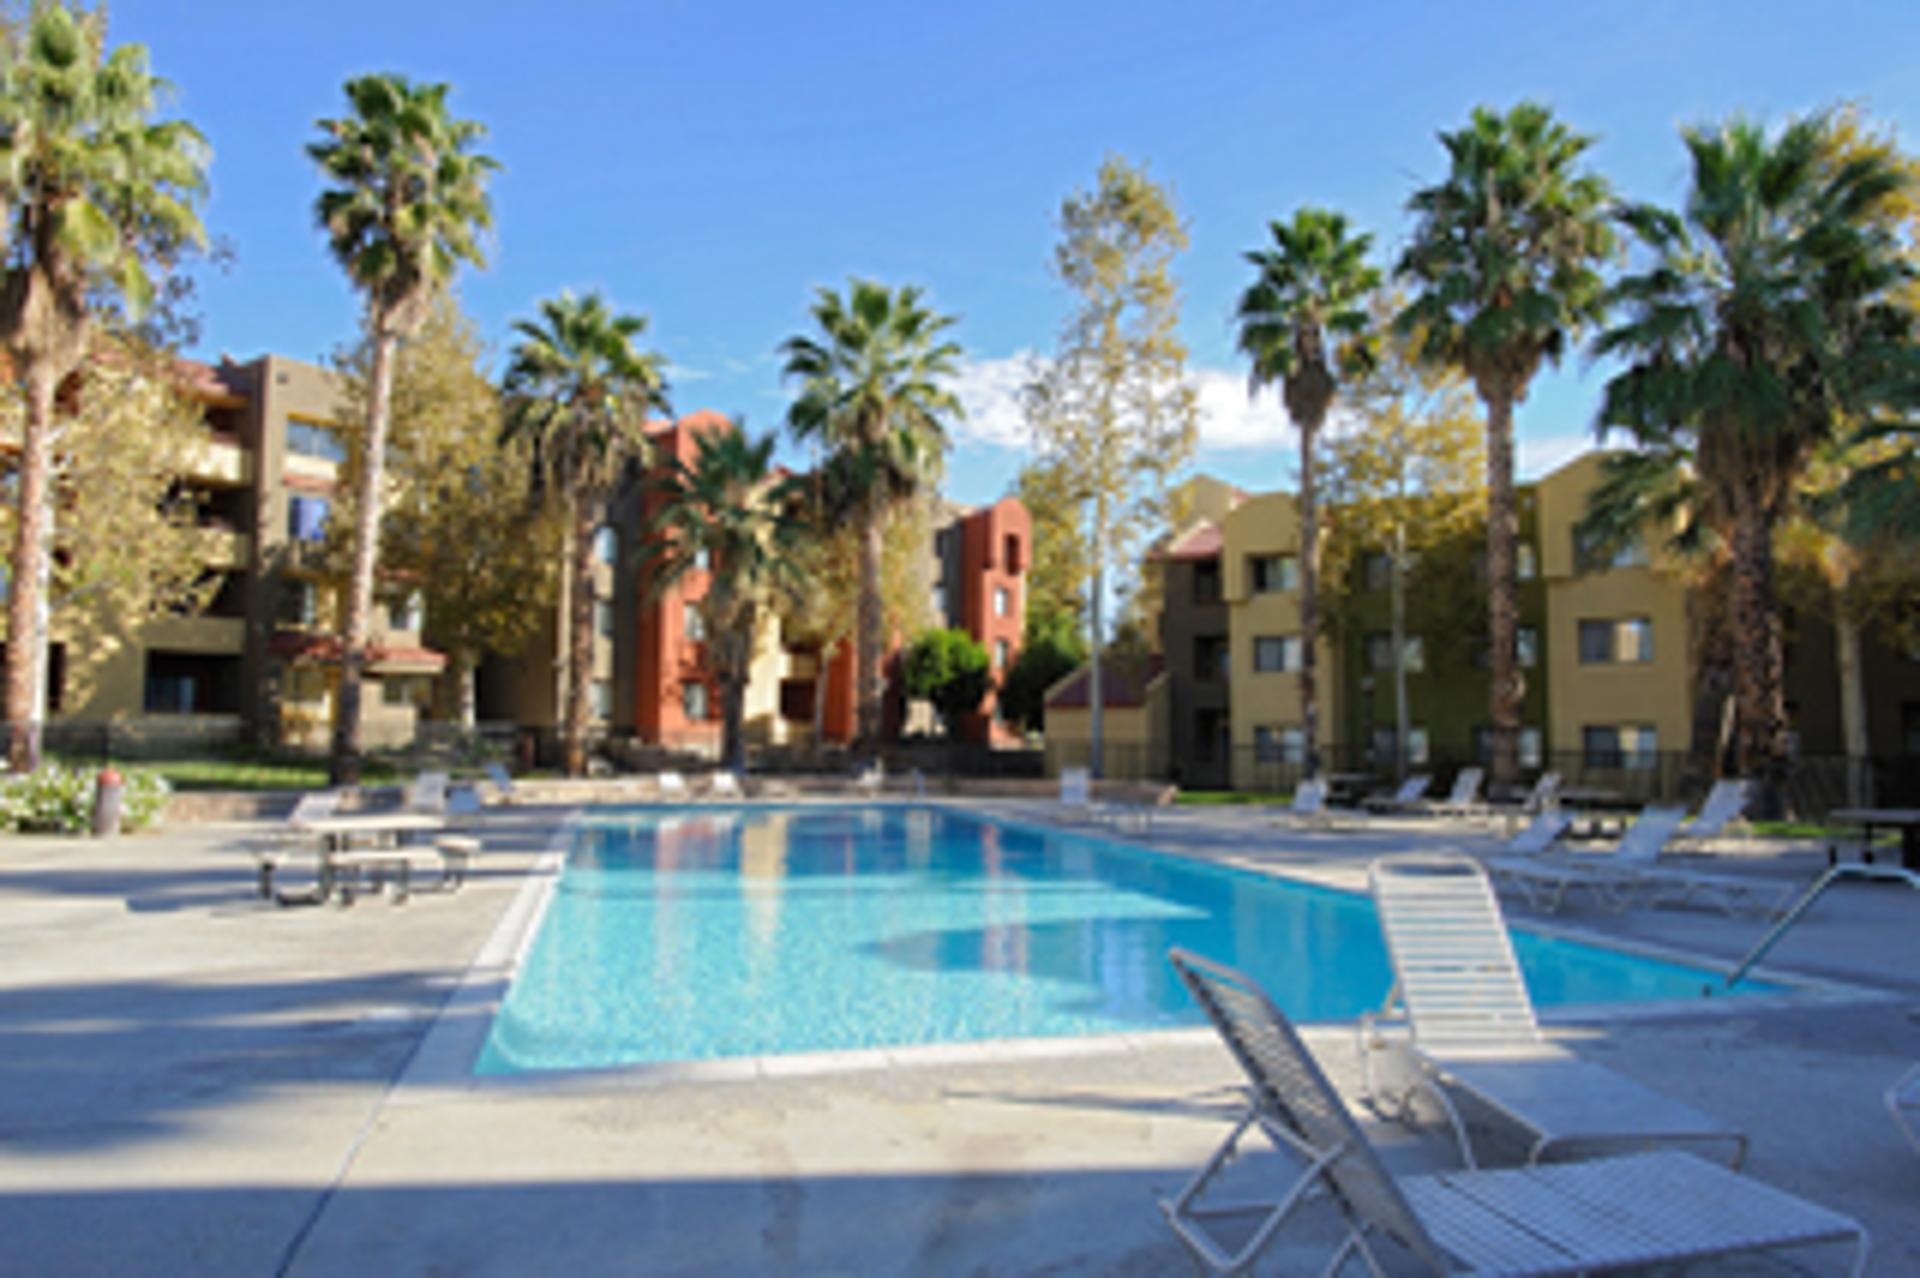 vacanza-studio-usa-los-angeles-zainetto-verde-california-state-university-nort-piscina.jpg